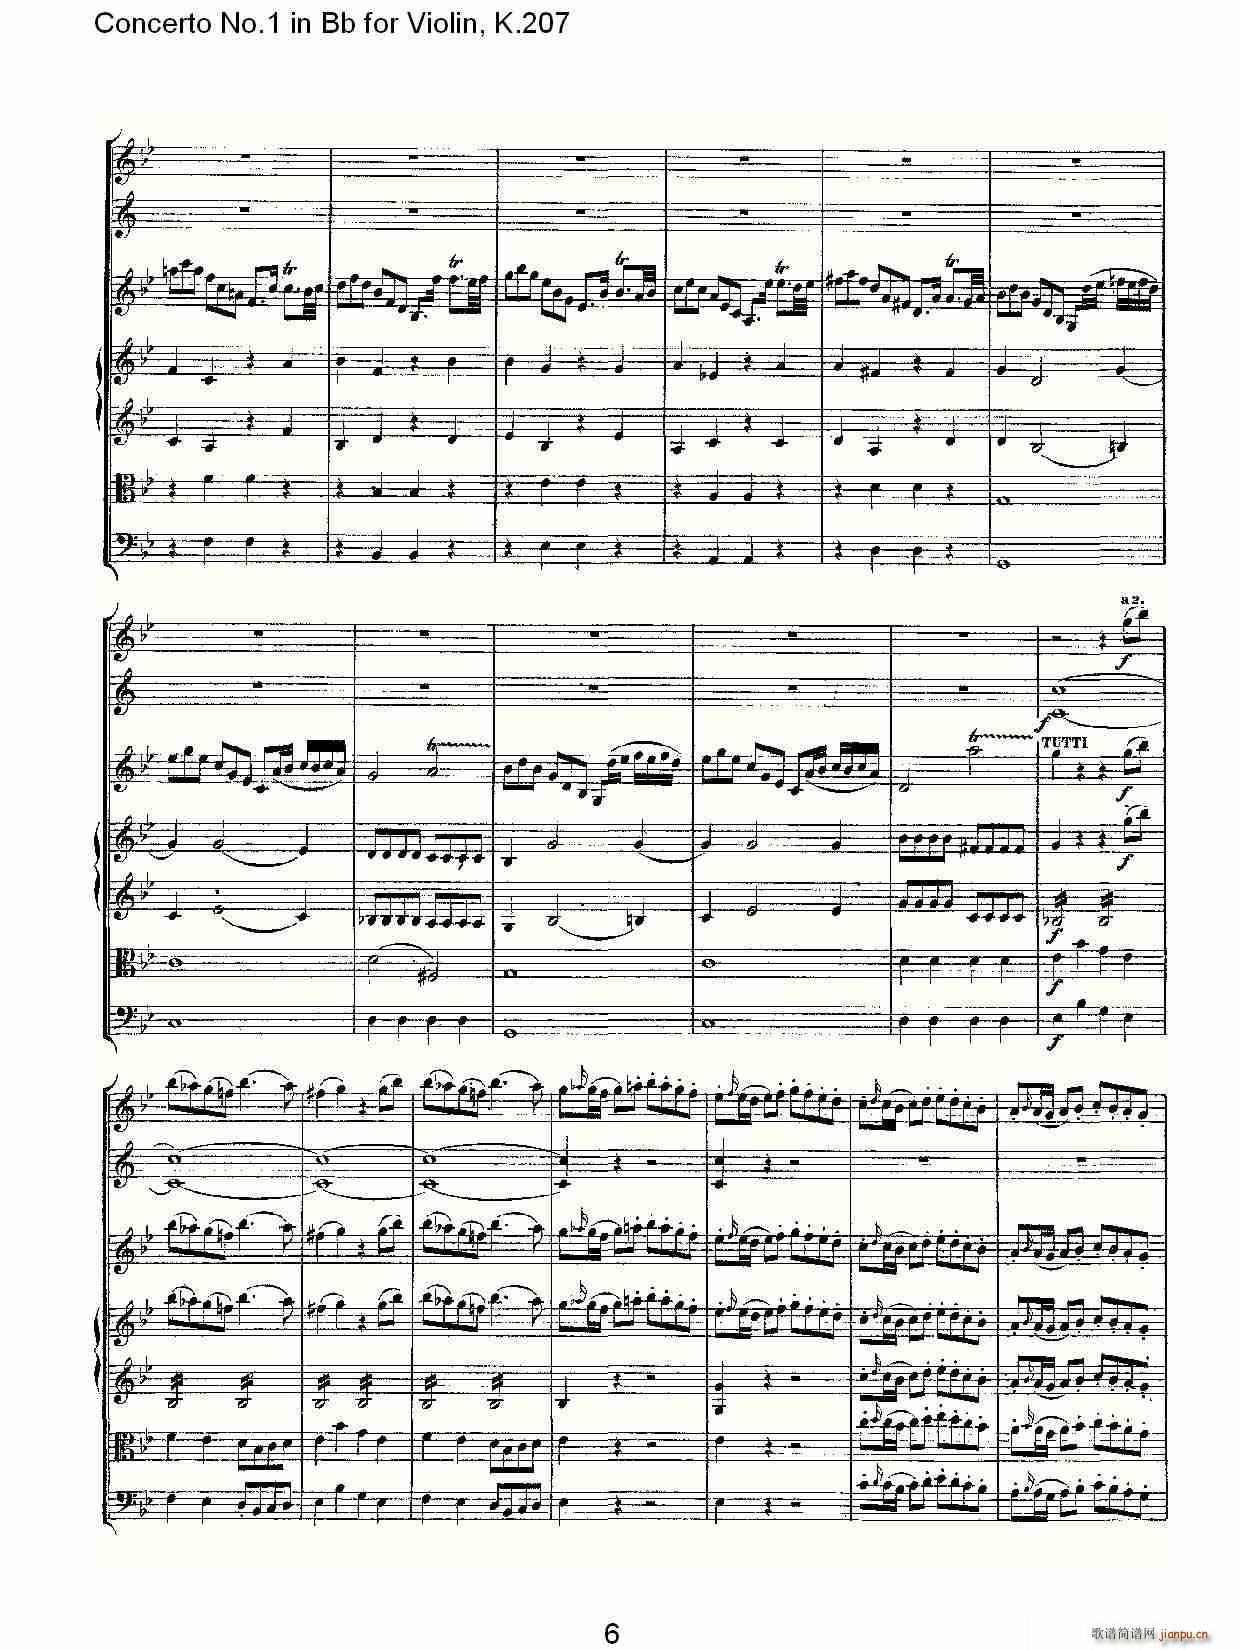 Concerto No.1 in Bb for Violin, K.207(С)6